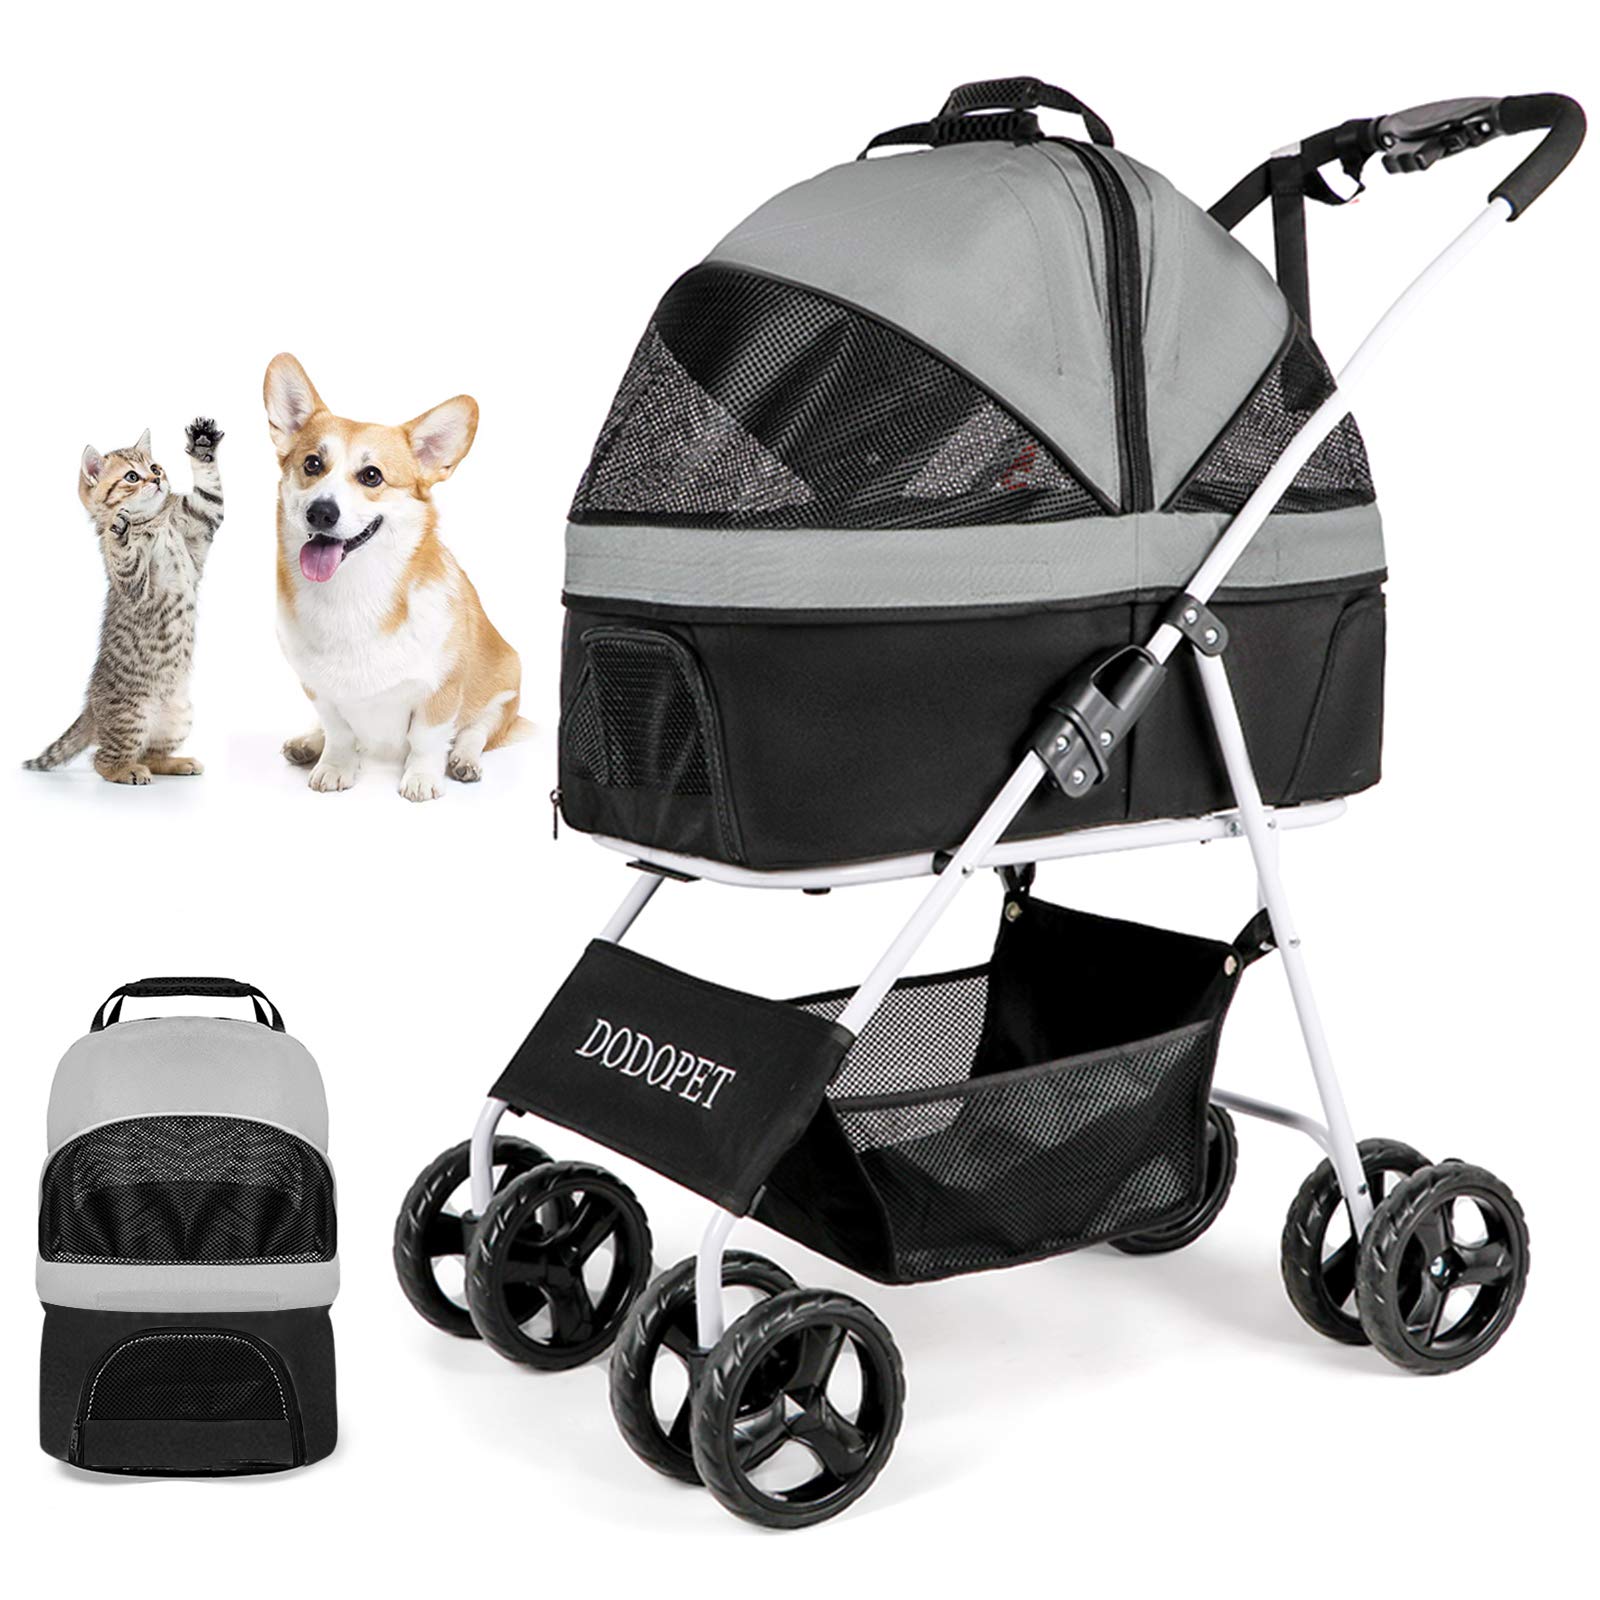 Dog/Cat/Pet Stroller for Small-Medium Pet